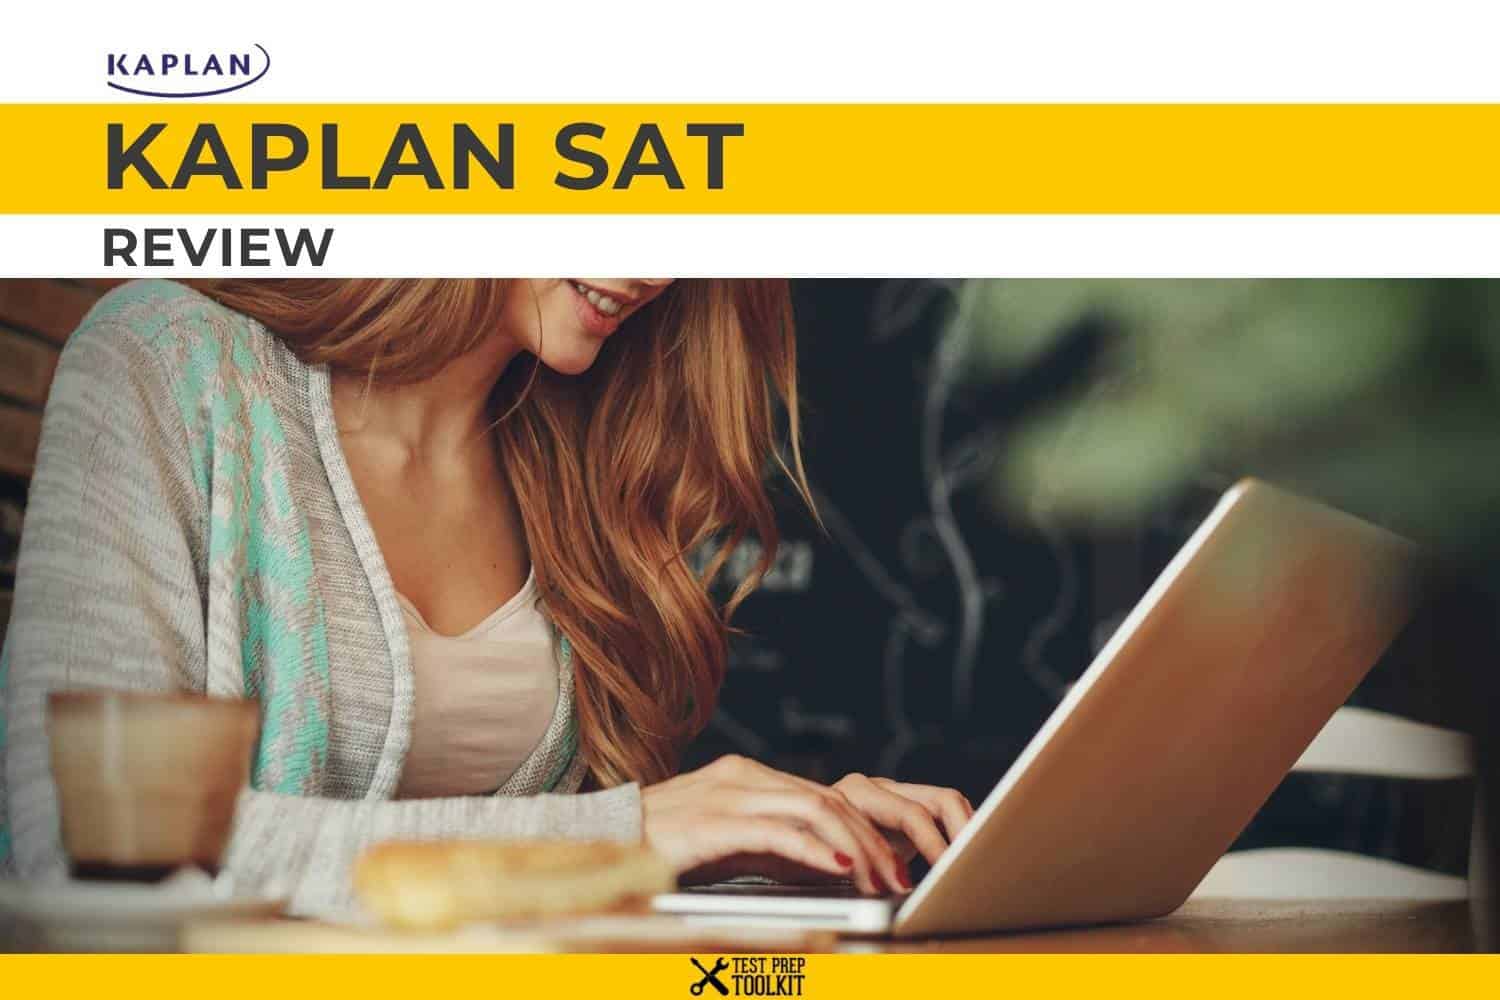 Kaplan SAT Prep Review Test Prep Toolkit